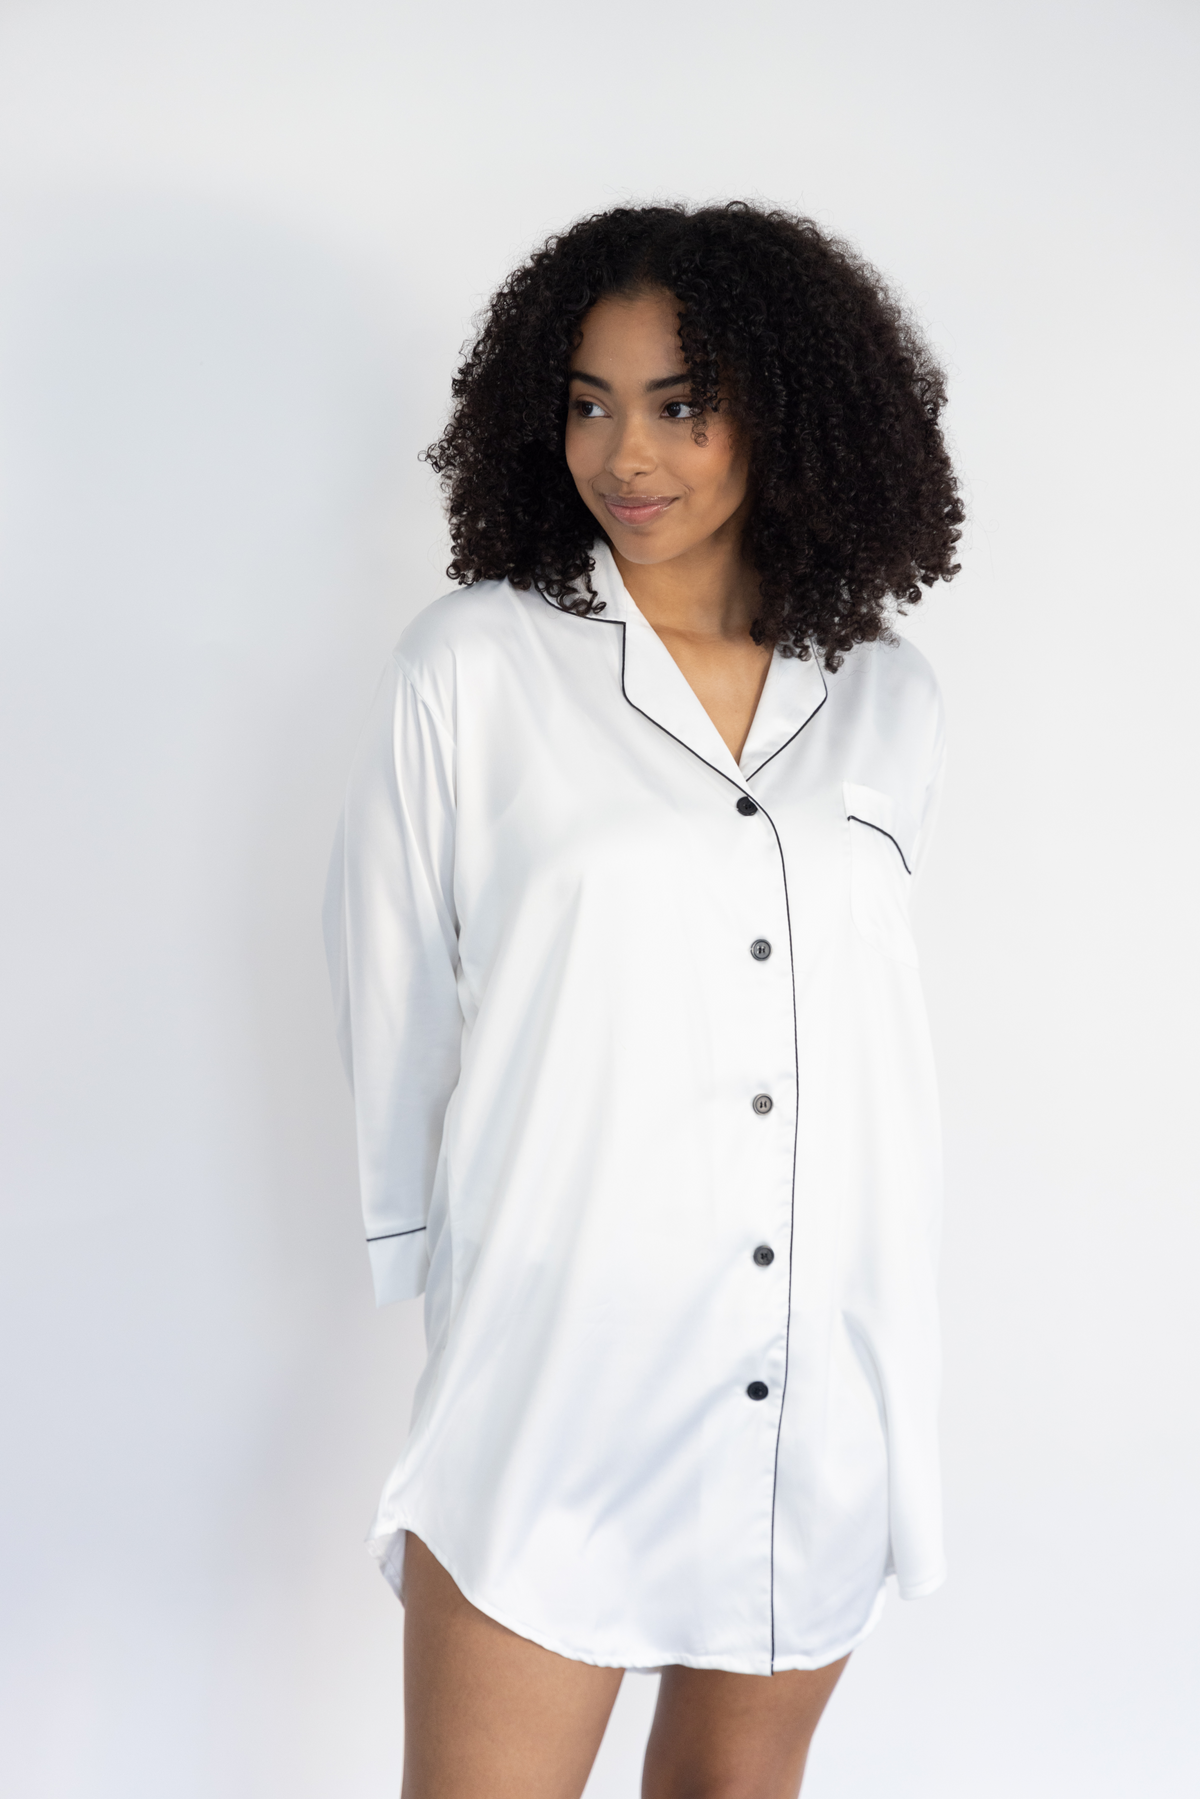 Sleep Shirt, Satin Womens Nightshirt Personalized, Ladies Sleep Shirt,  Monogrammed, Bride Pajamas, Satin Nighty Bridal Party Gift, N 10/17 